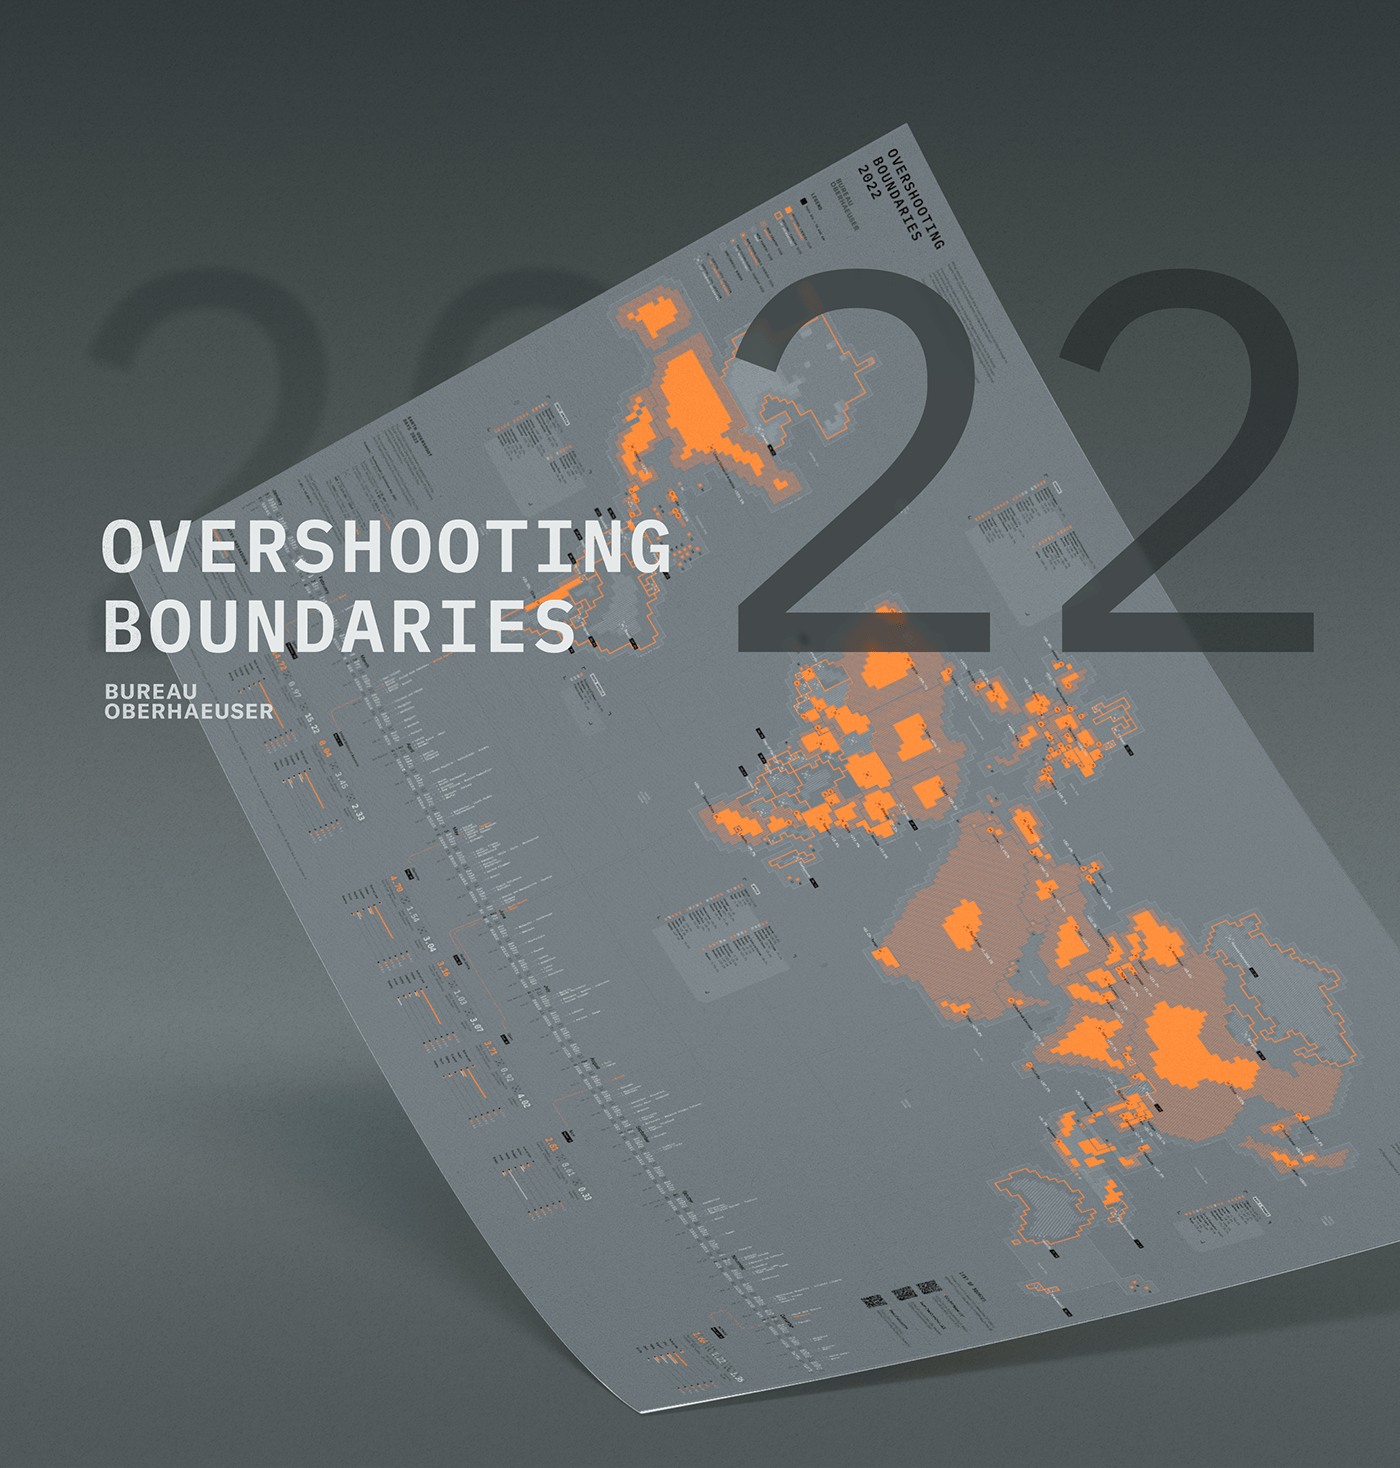 Calendar 2022 data visualization dataviz graphic design  infographic information design map overshoot poster world